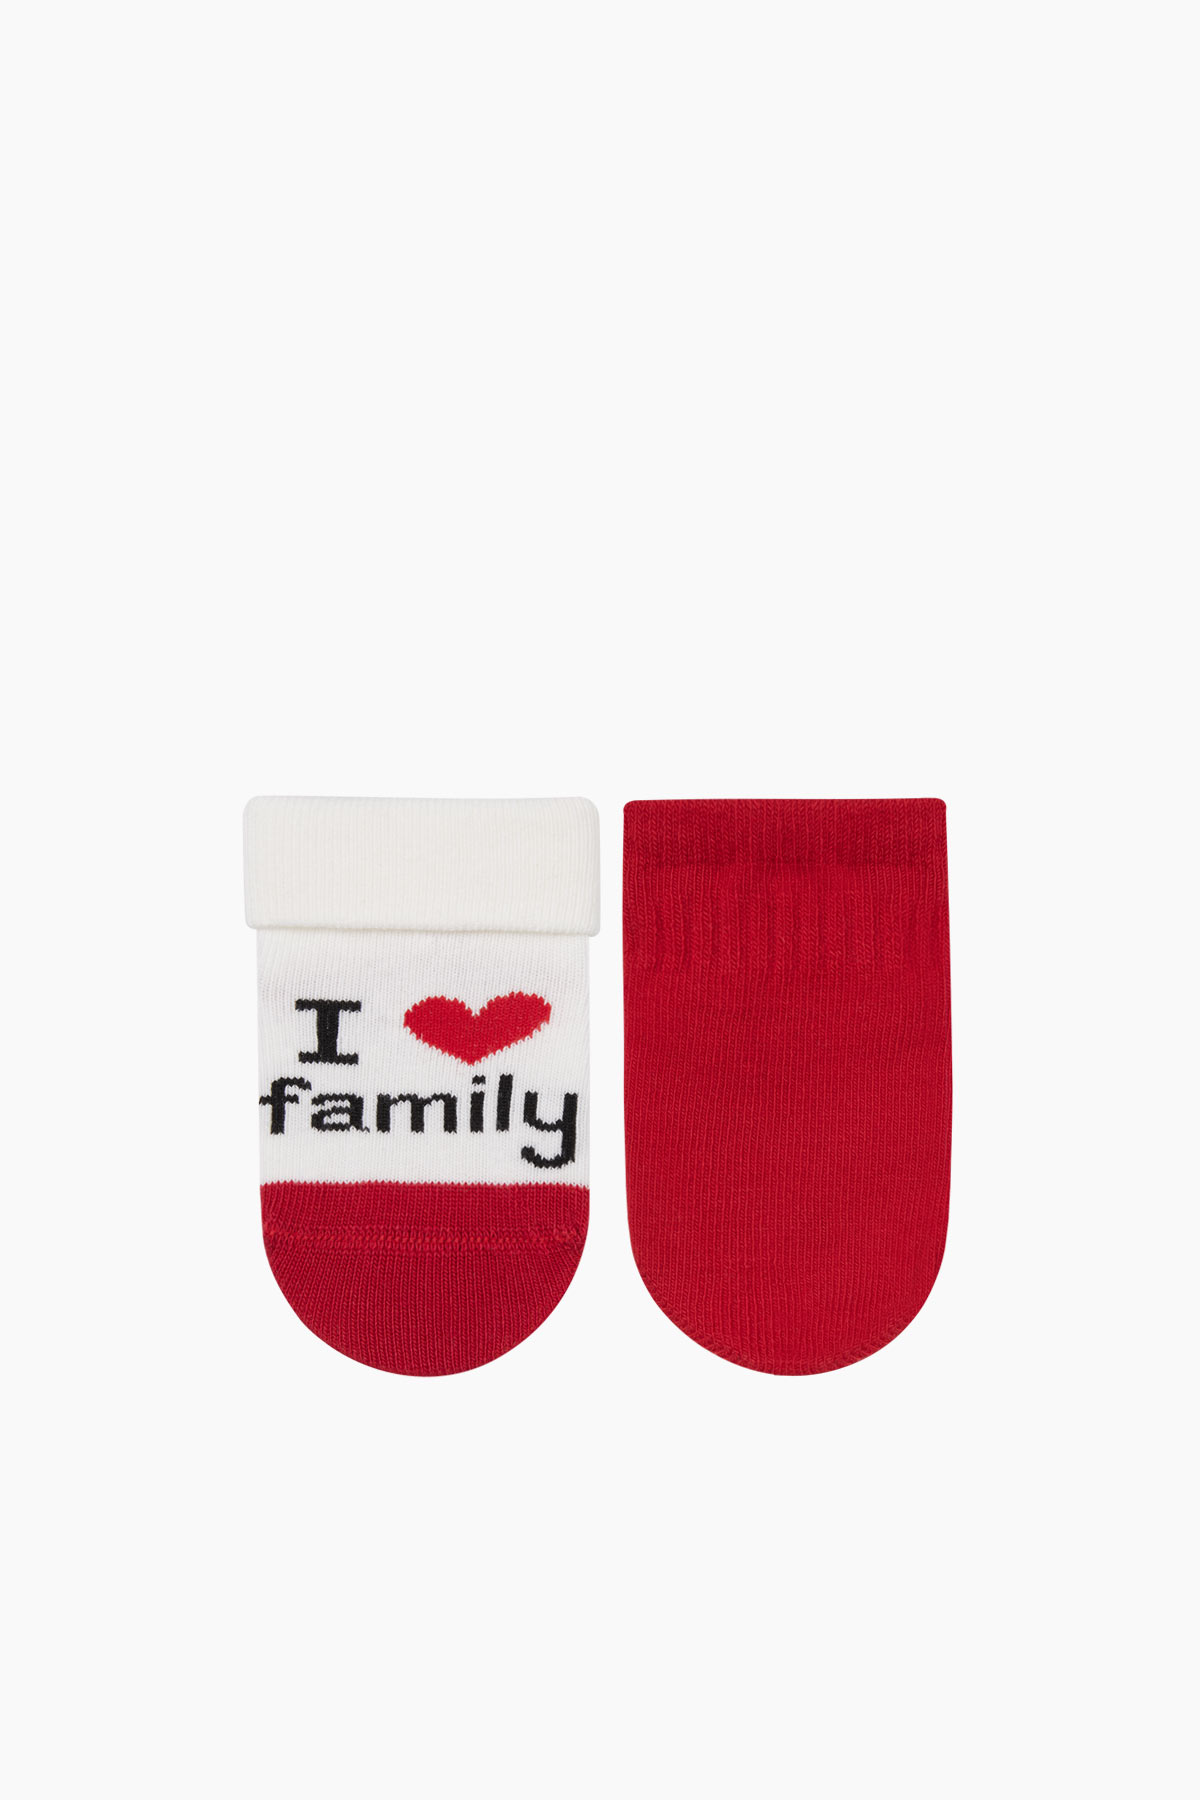 Bross - Bross 2er Pack Neugeborene Handschuhe und Socken kombinieren